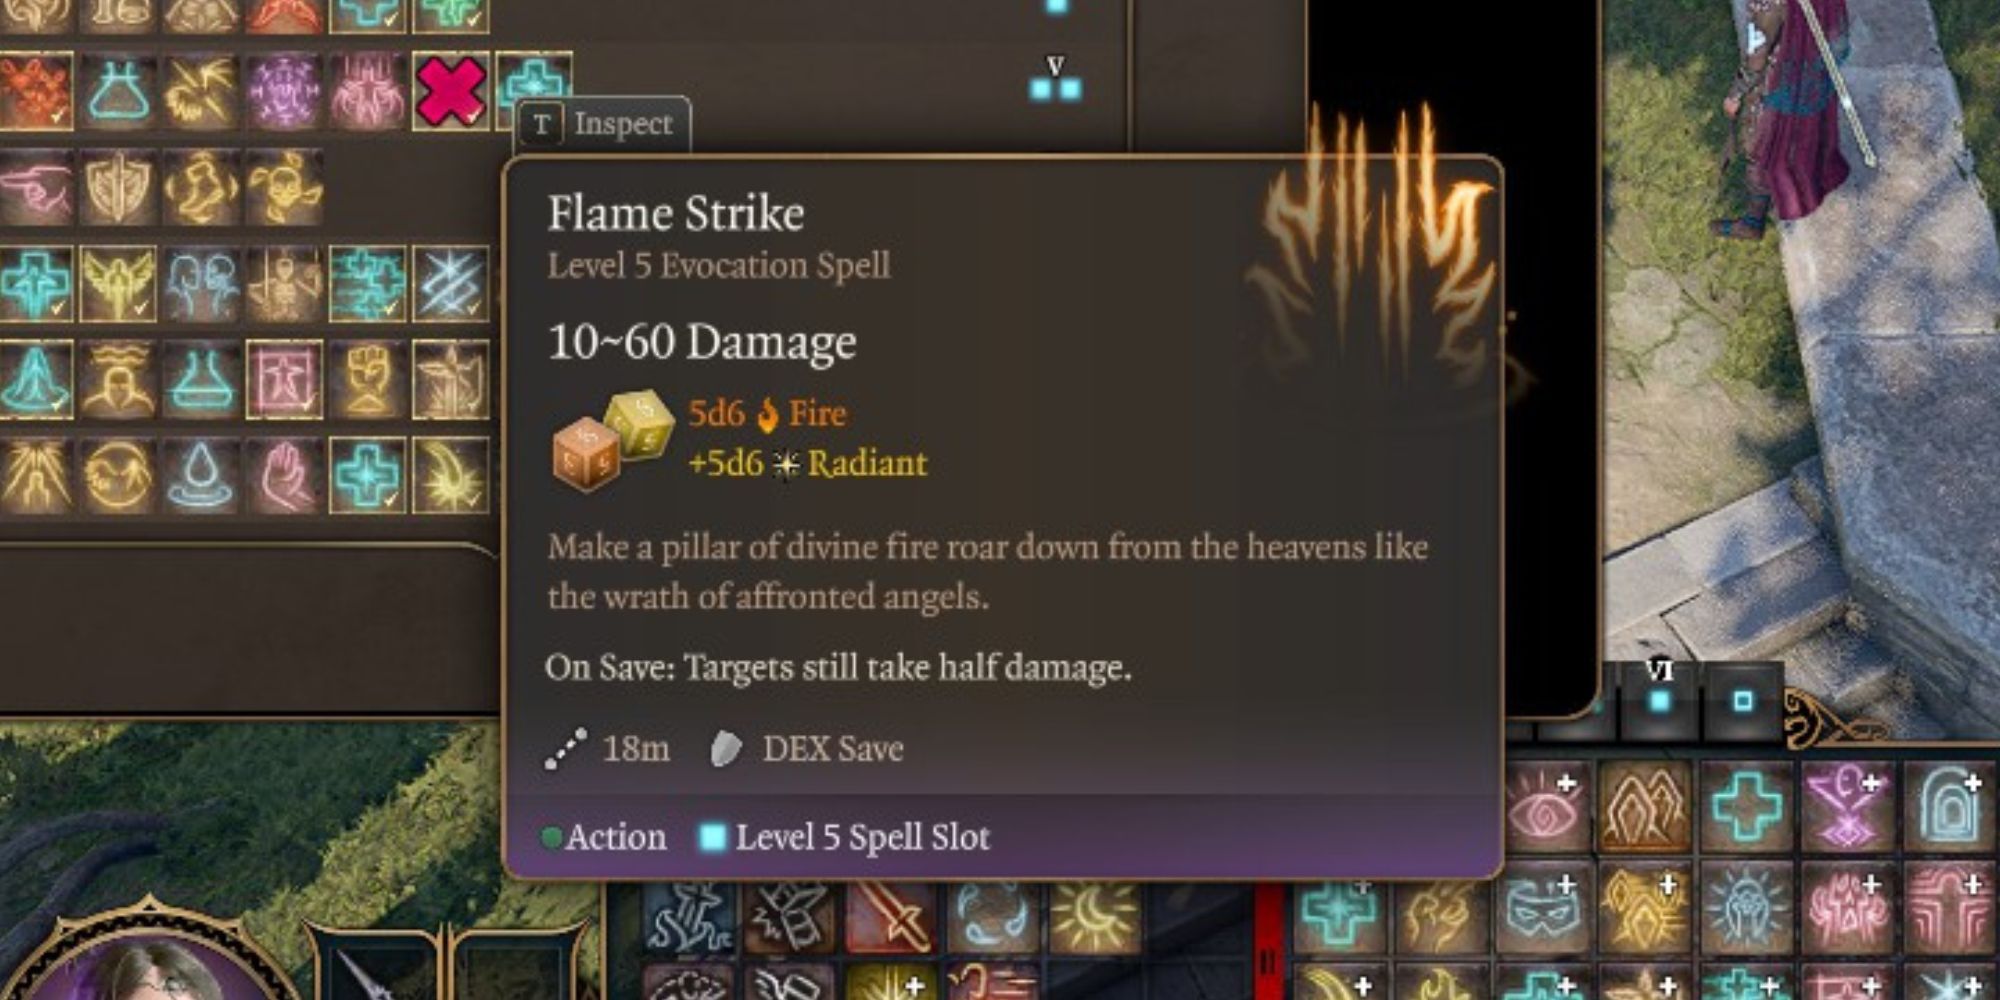 The Flame Strike spell in Baldur’s Gate 3